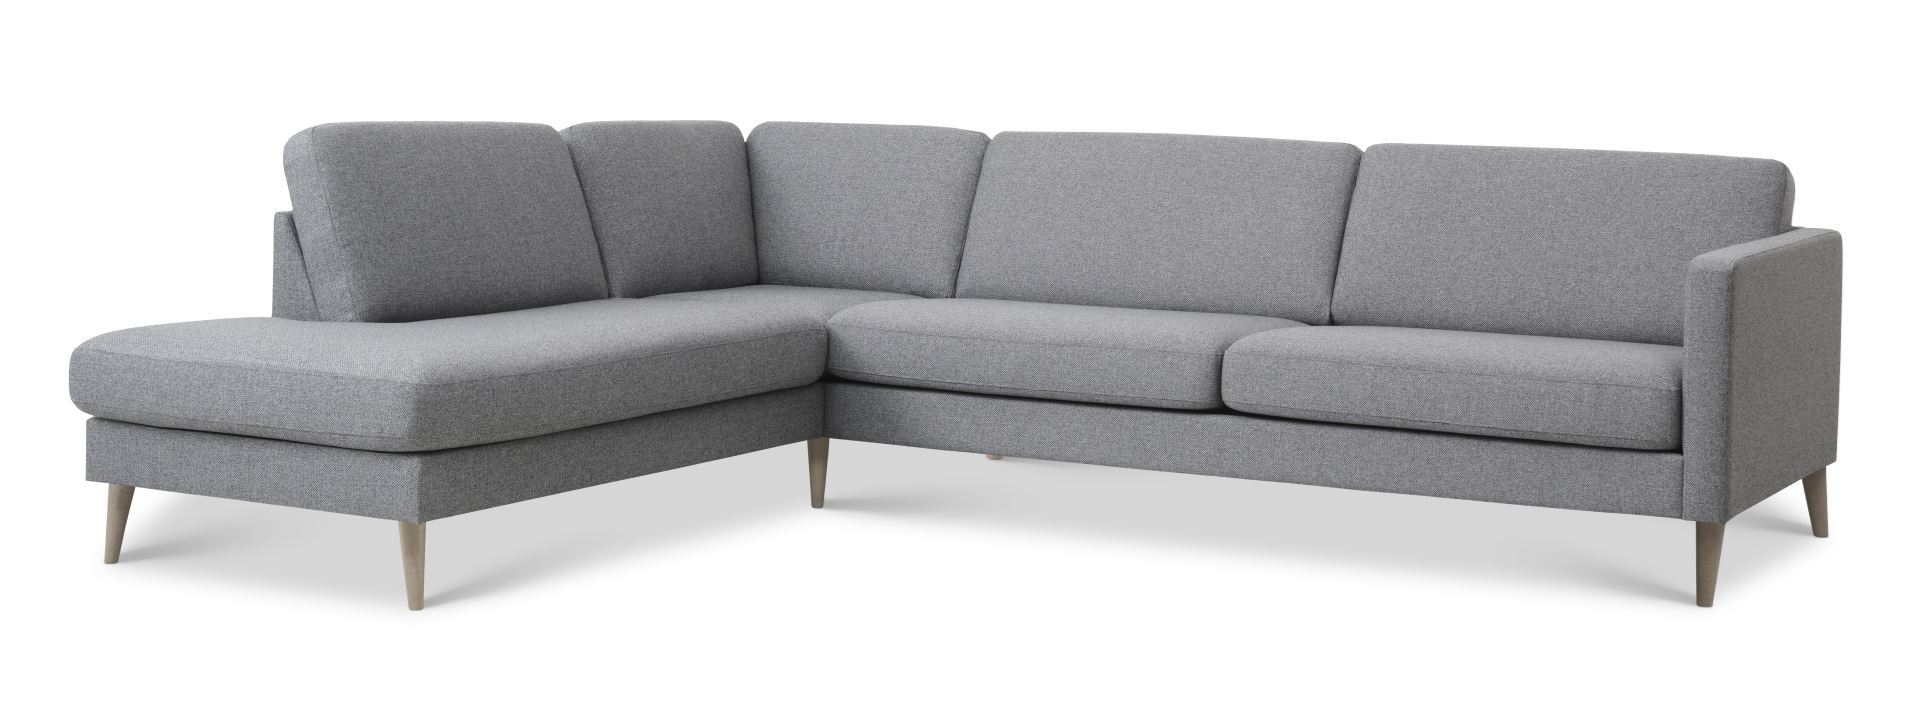 Ask sæt 60 stor OE sofa, m. venstre chaiselong - lys granitgrå polyester stof og natur træ